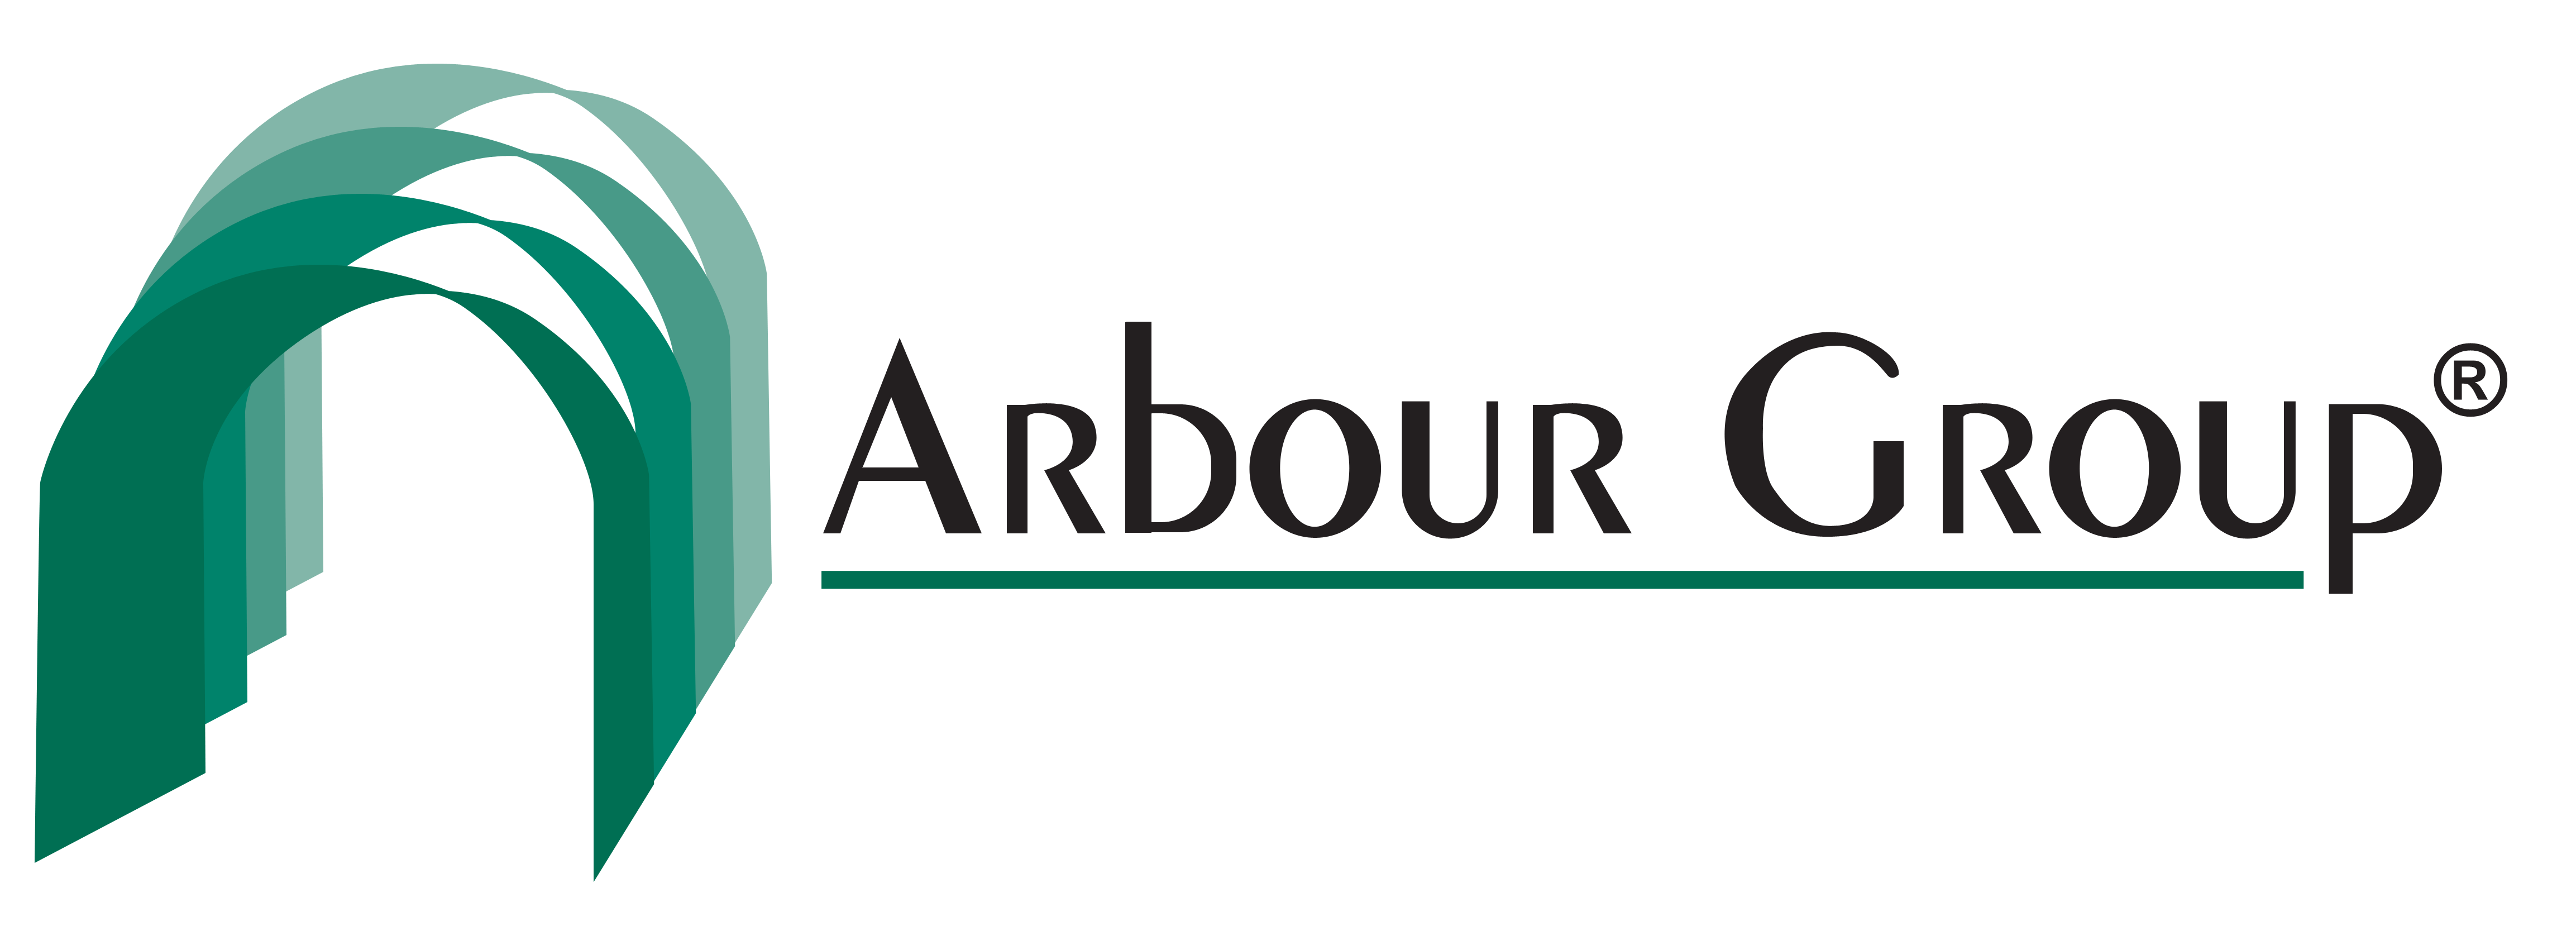 Arbour Group Logo - Hi Res